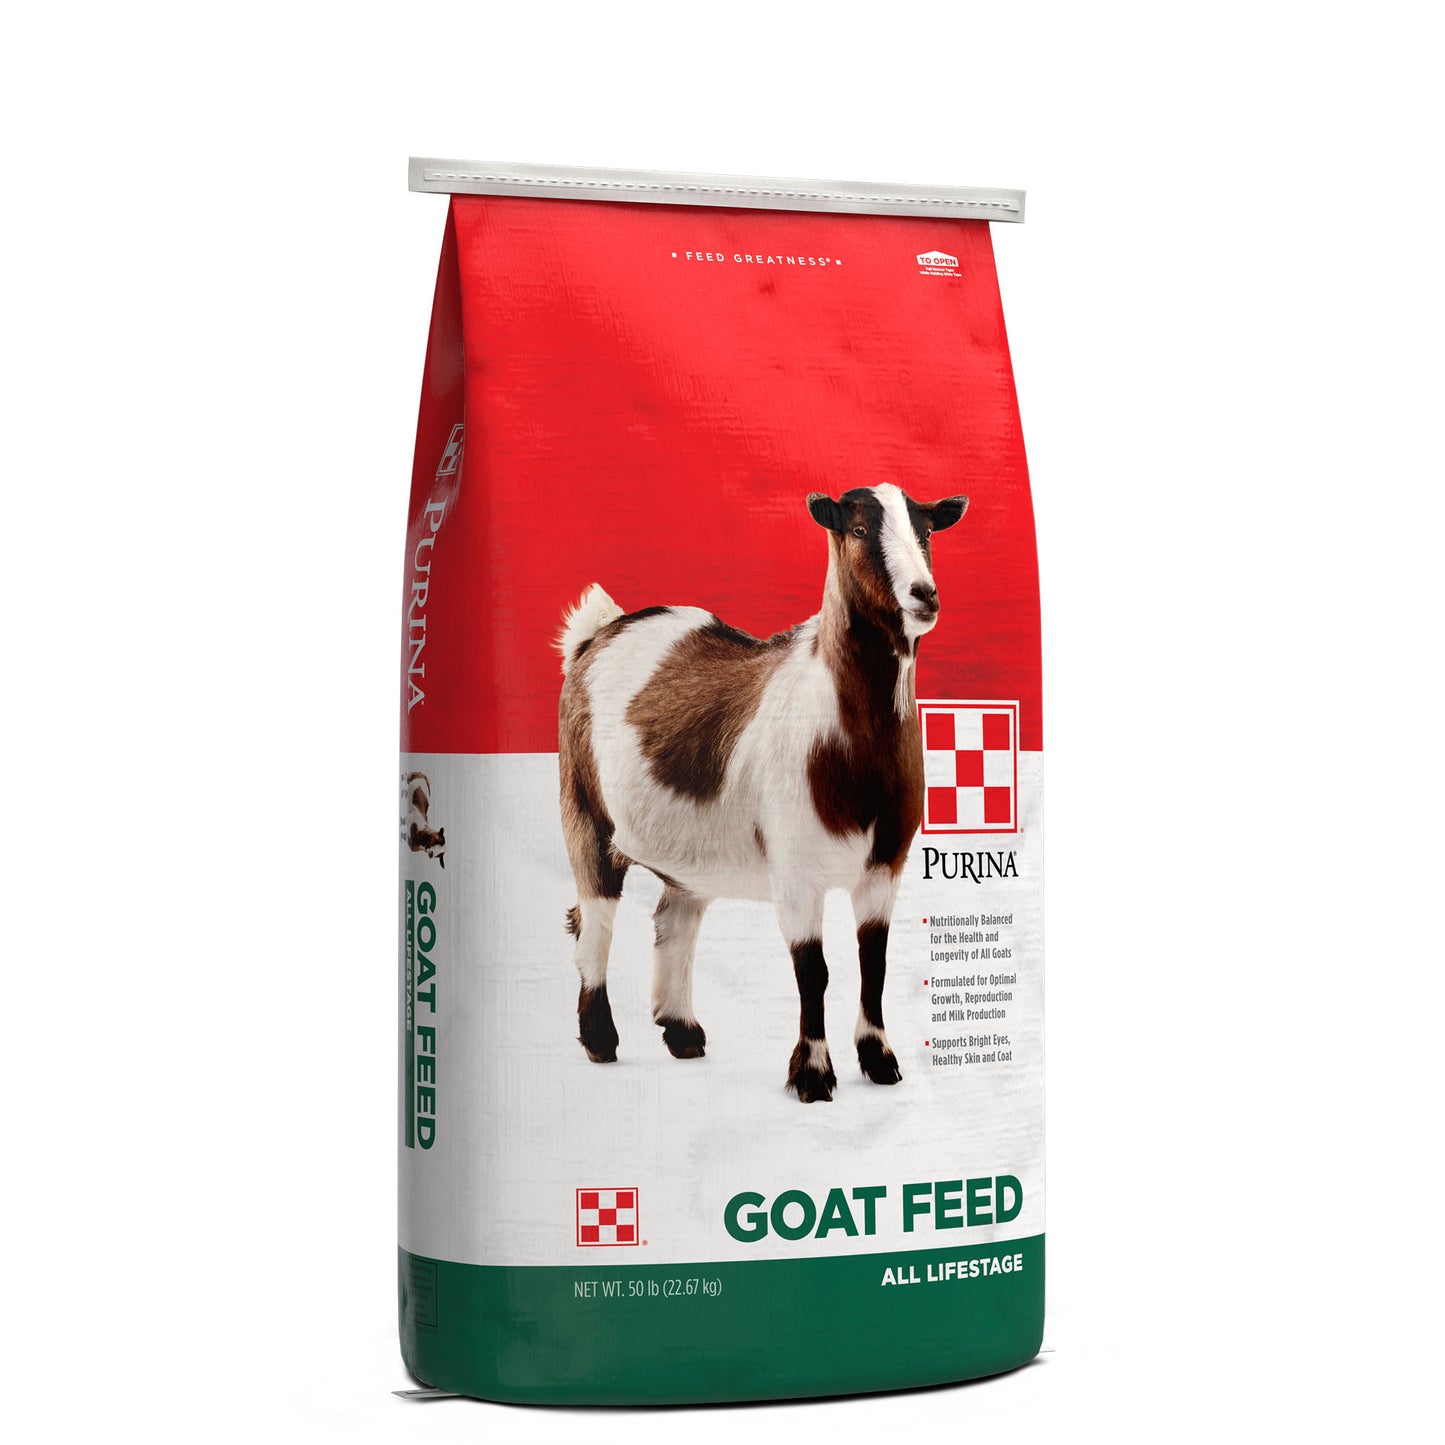 Purina Goat Feed 50 Pound Bag